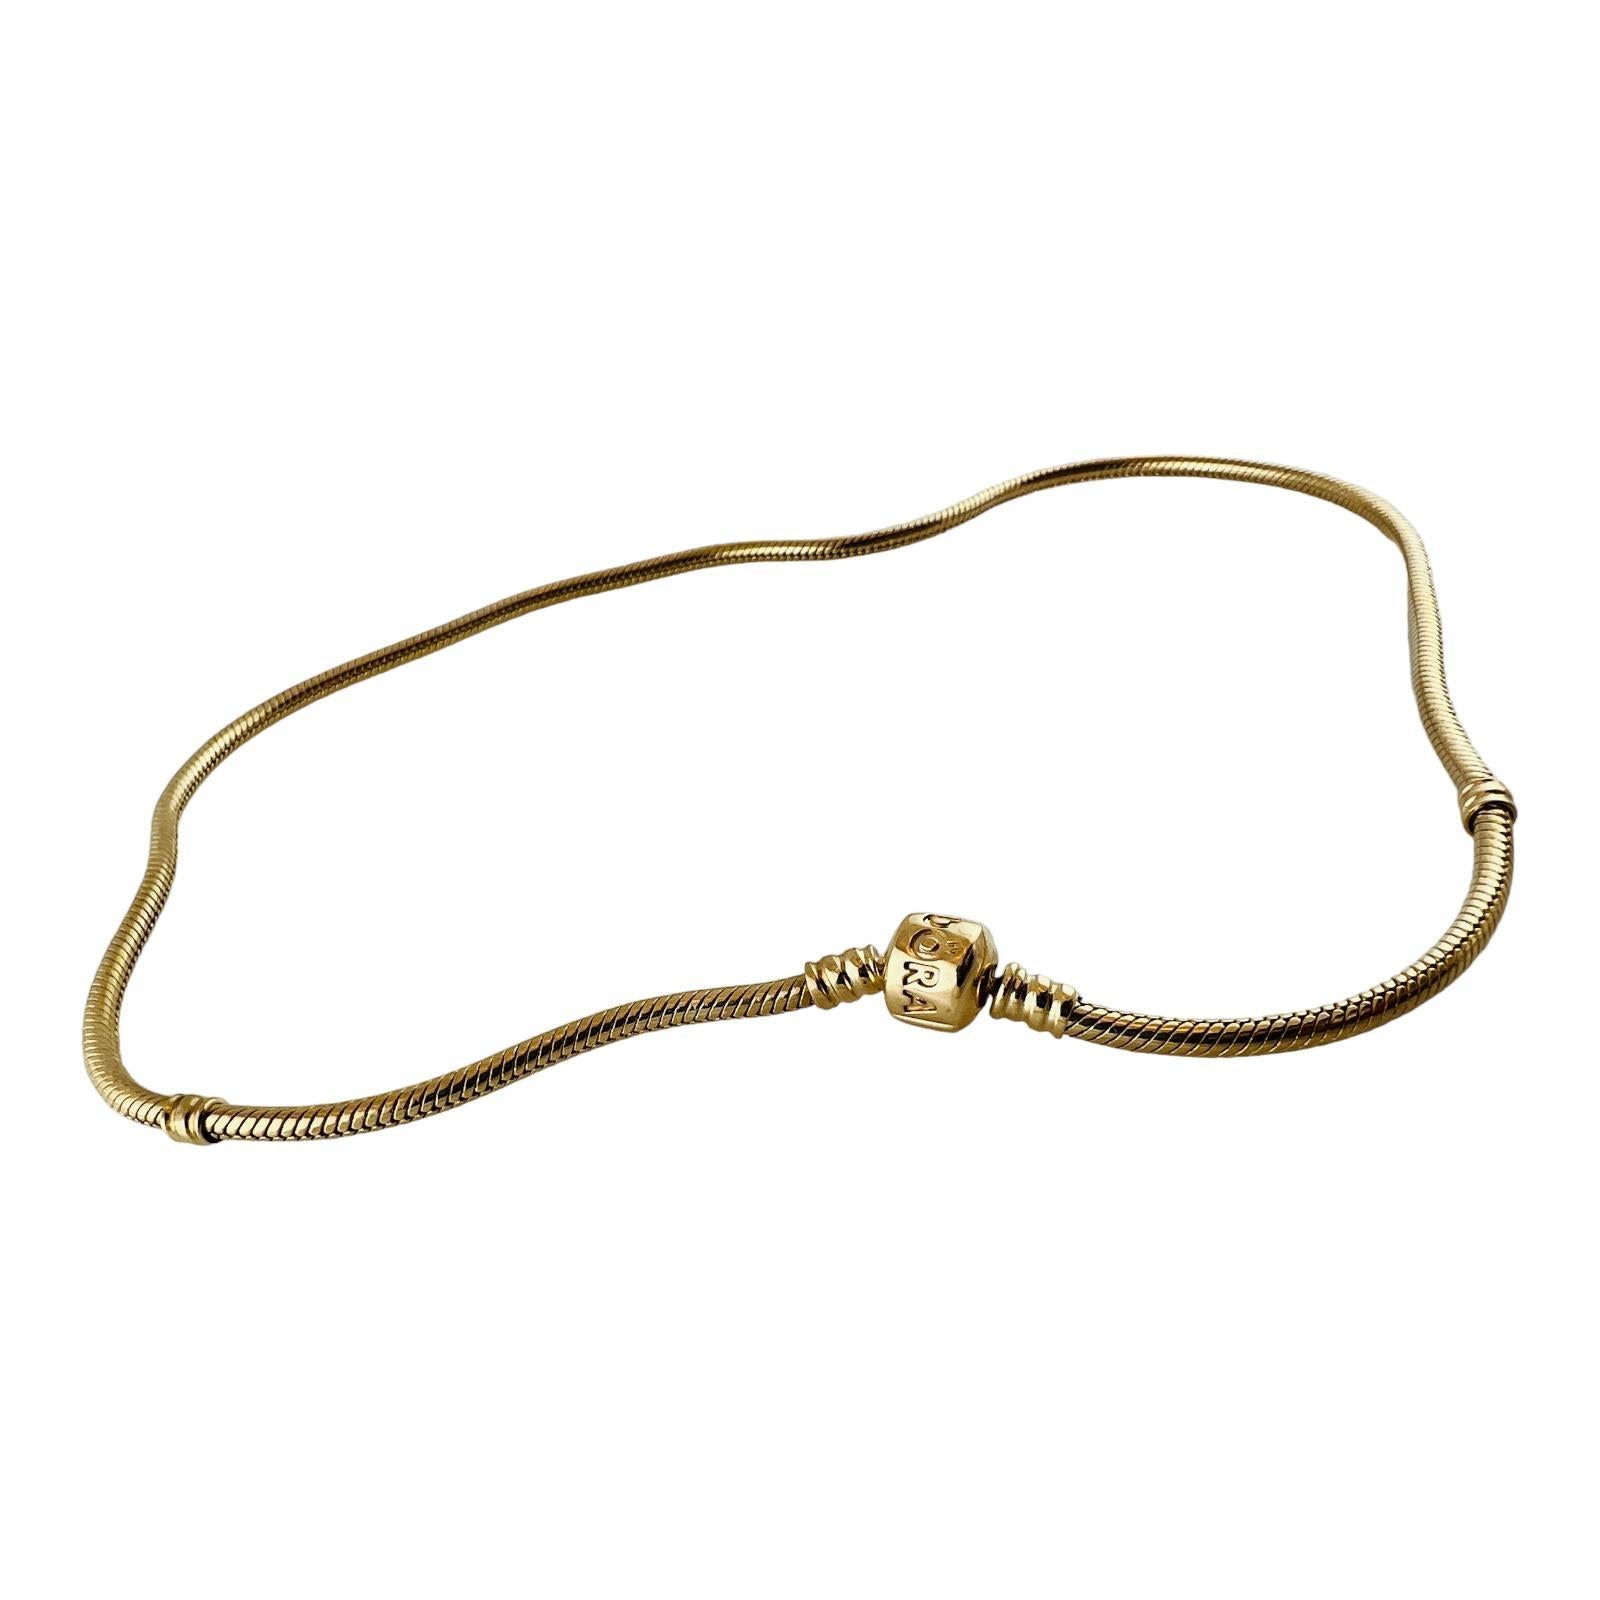 gold pandora snake chain necklace